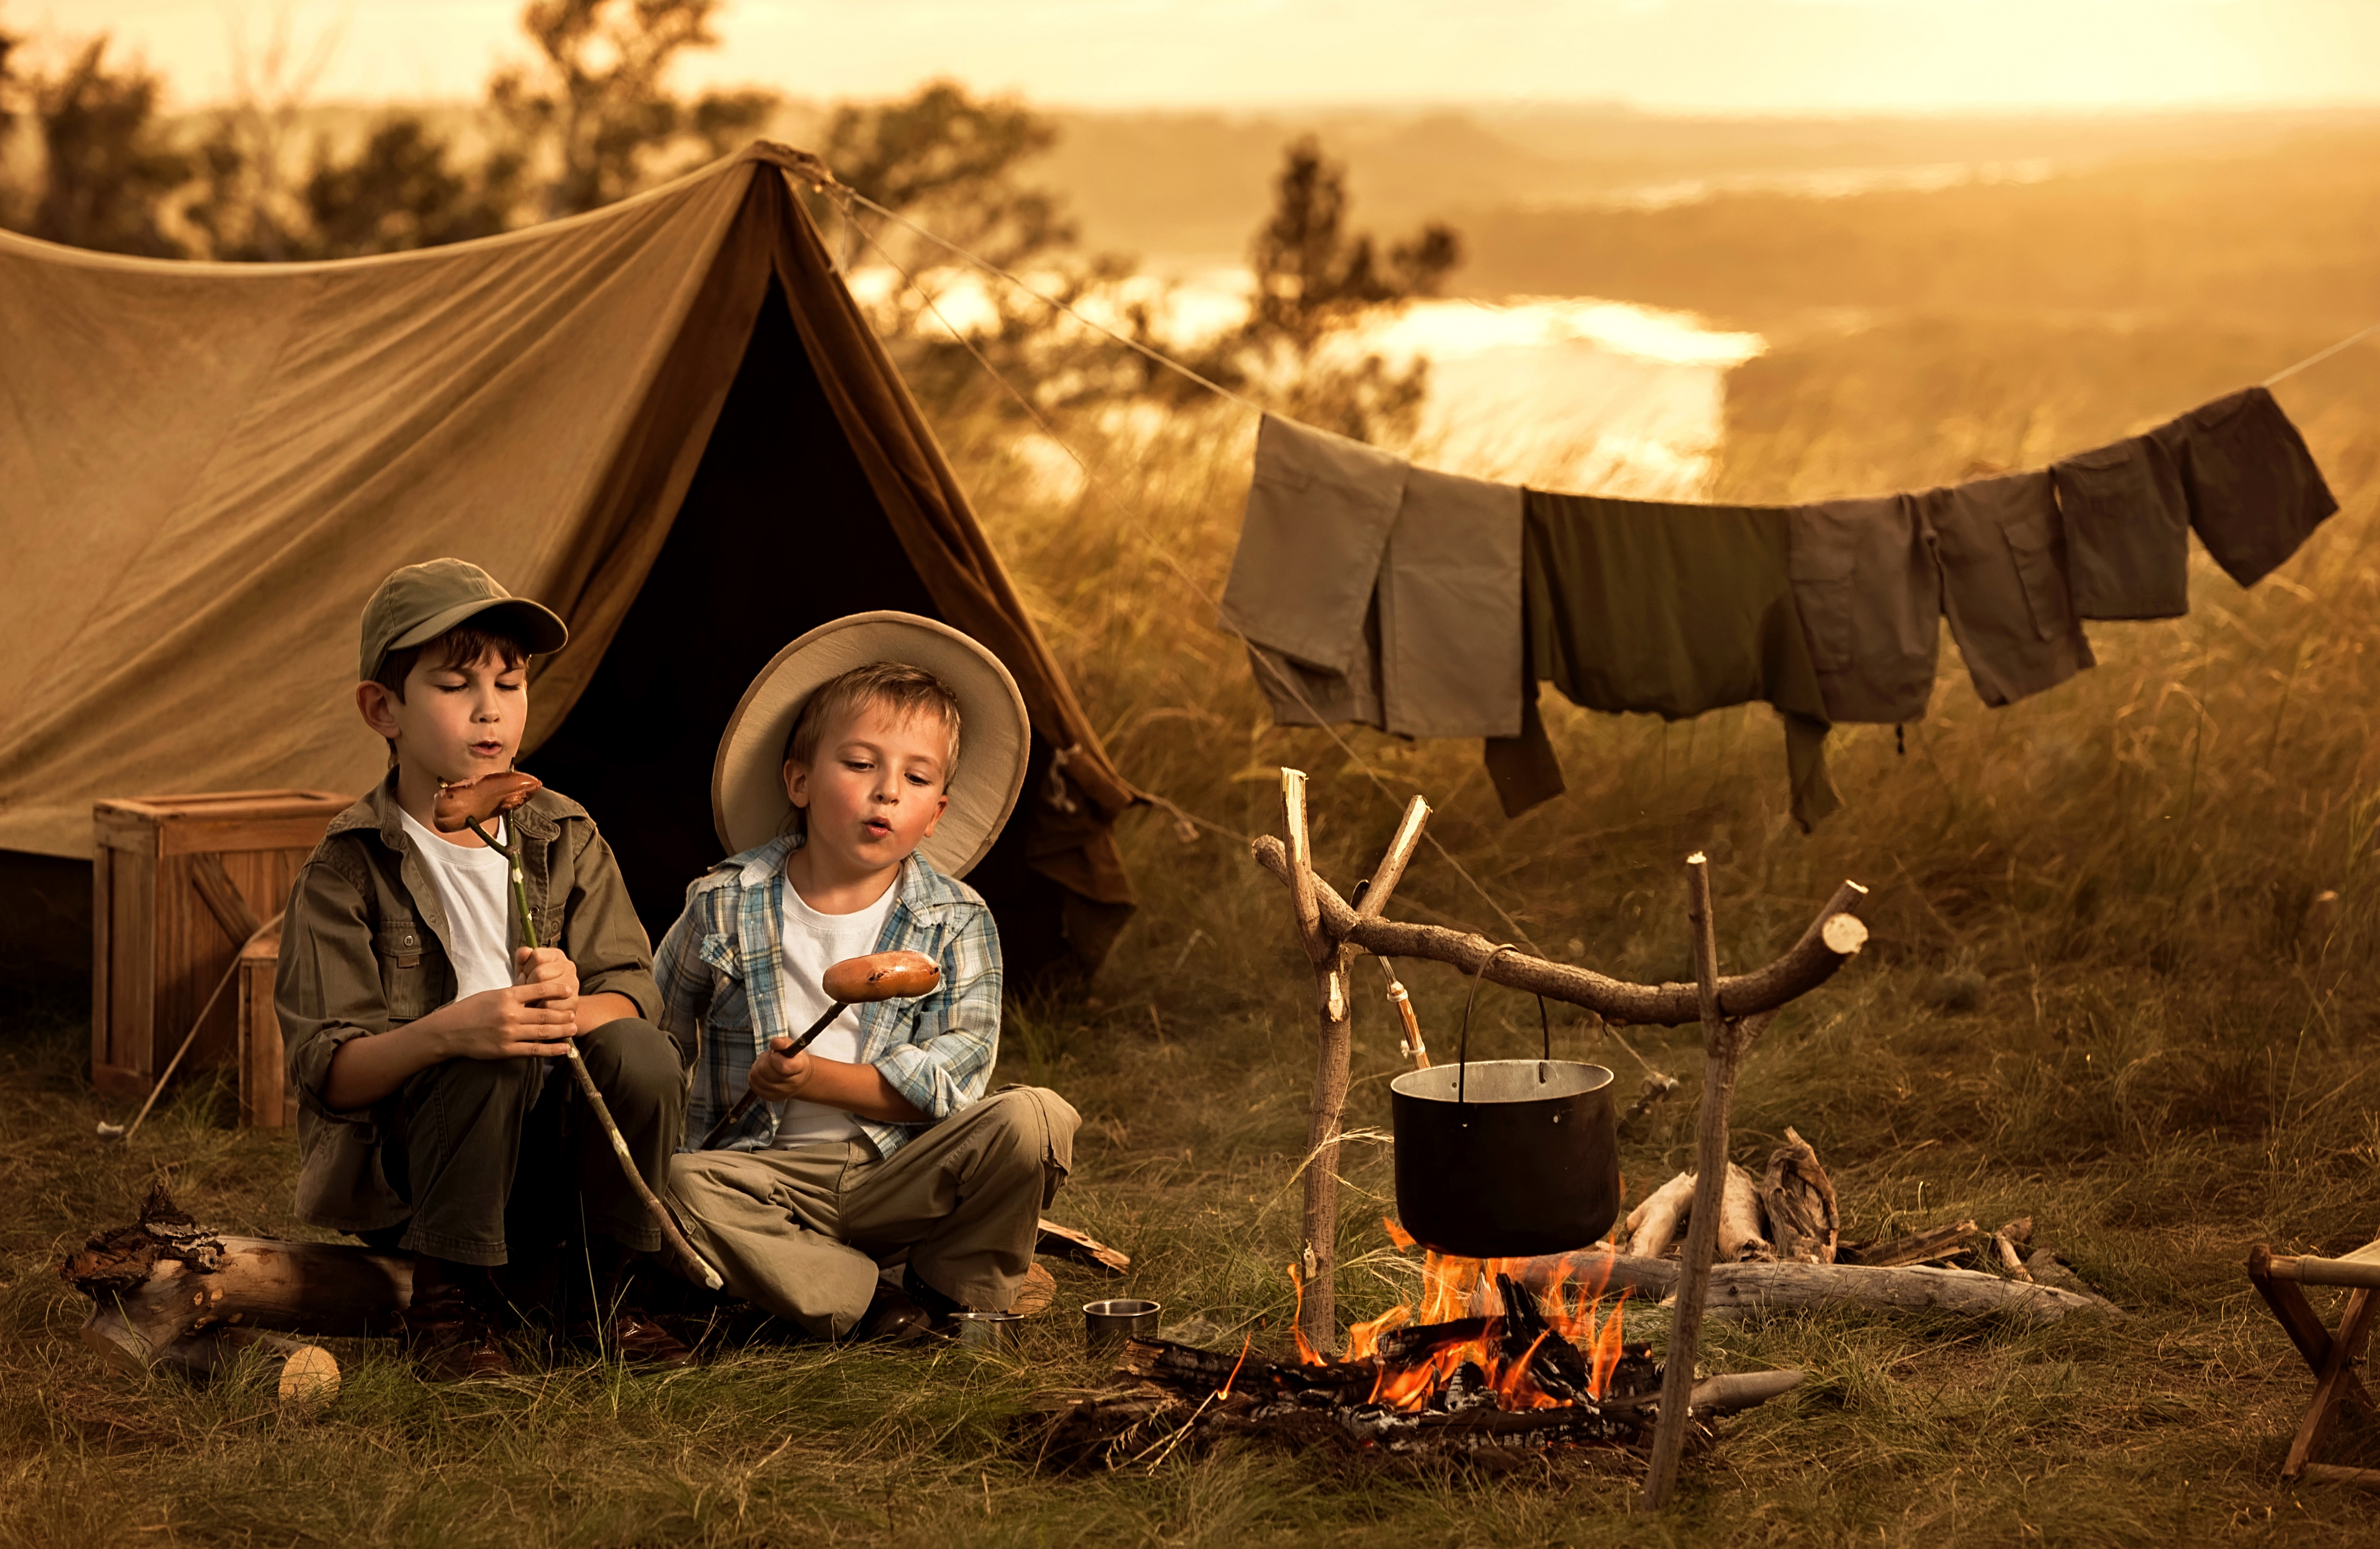 Camping boys